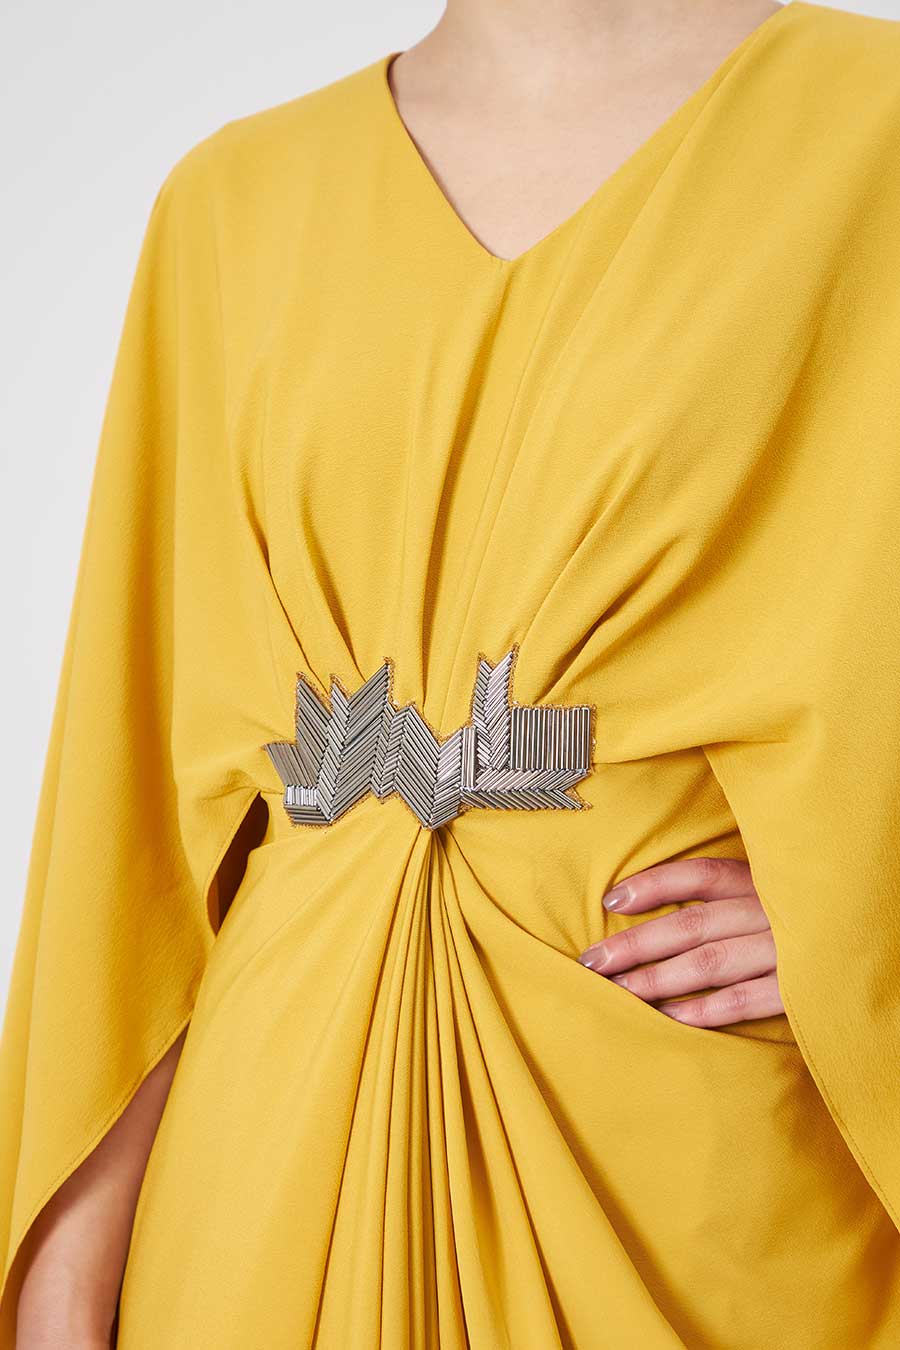 Metallic Embroidery Yellow Drape Dress